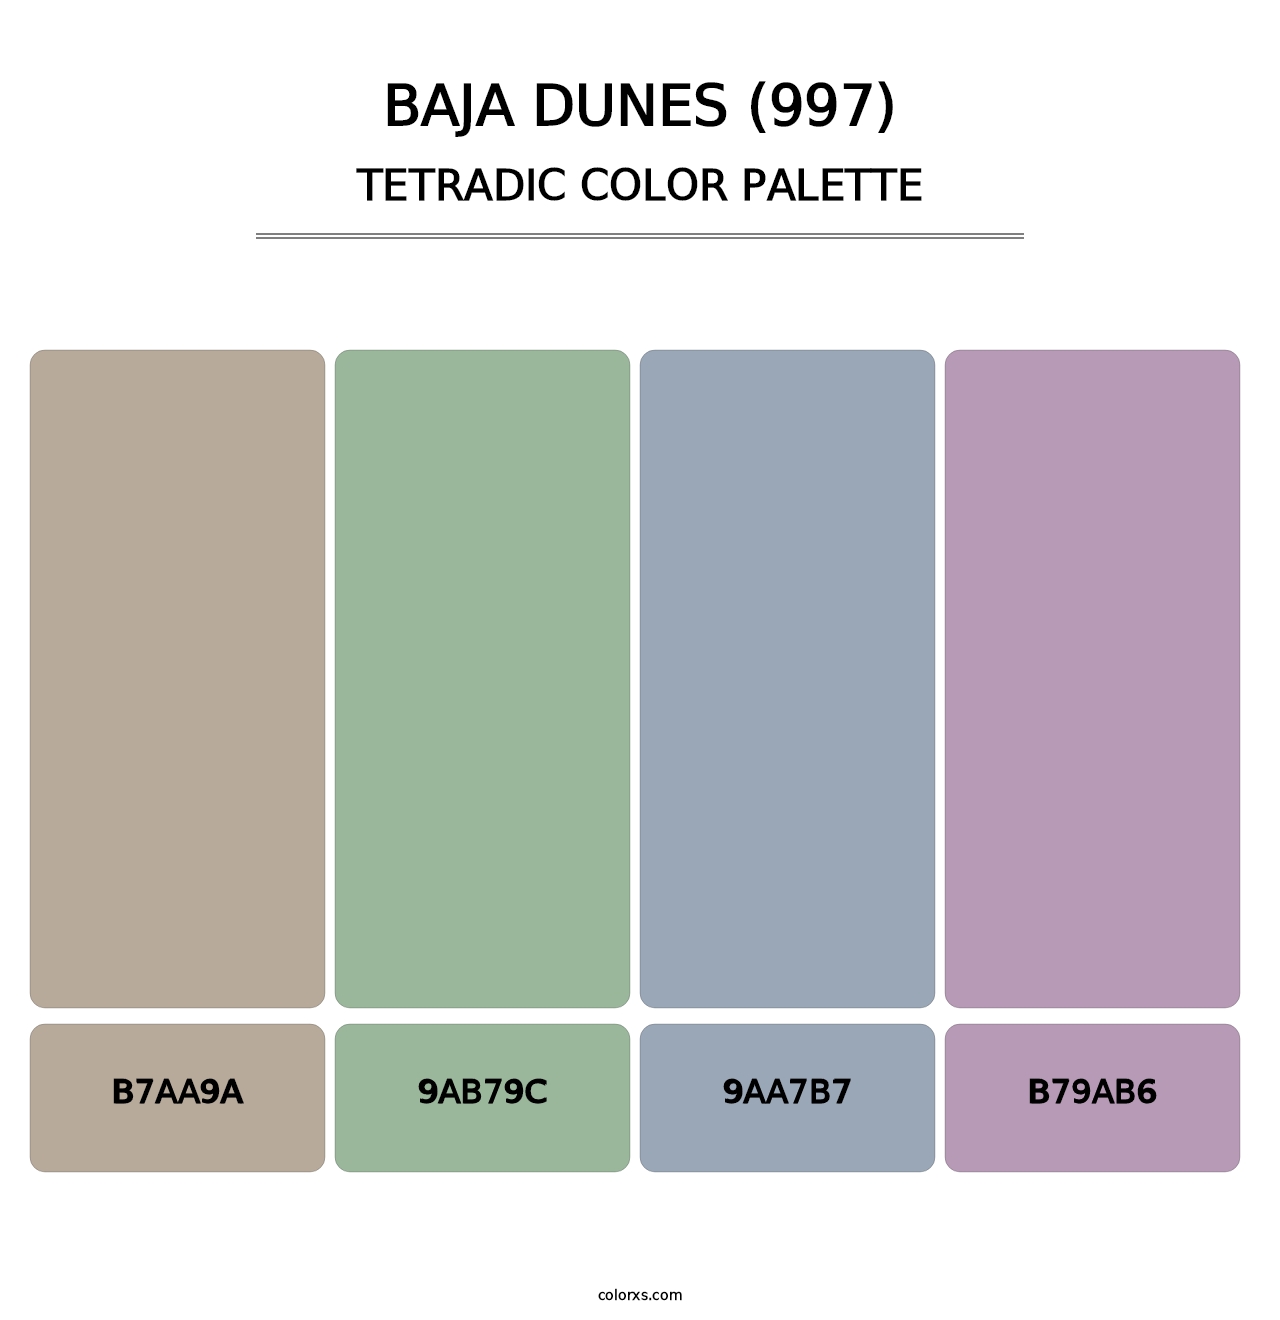 Baja Dunes (997) - Tetradic Color Palette